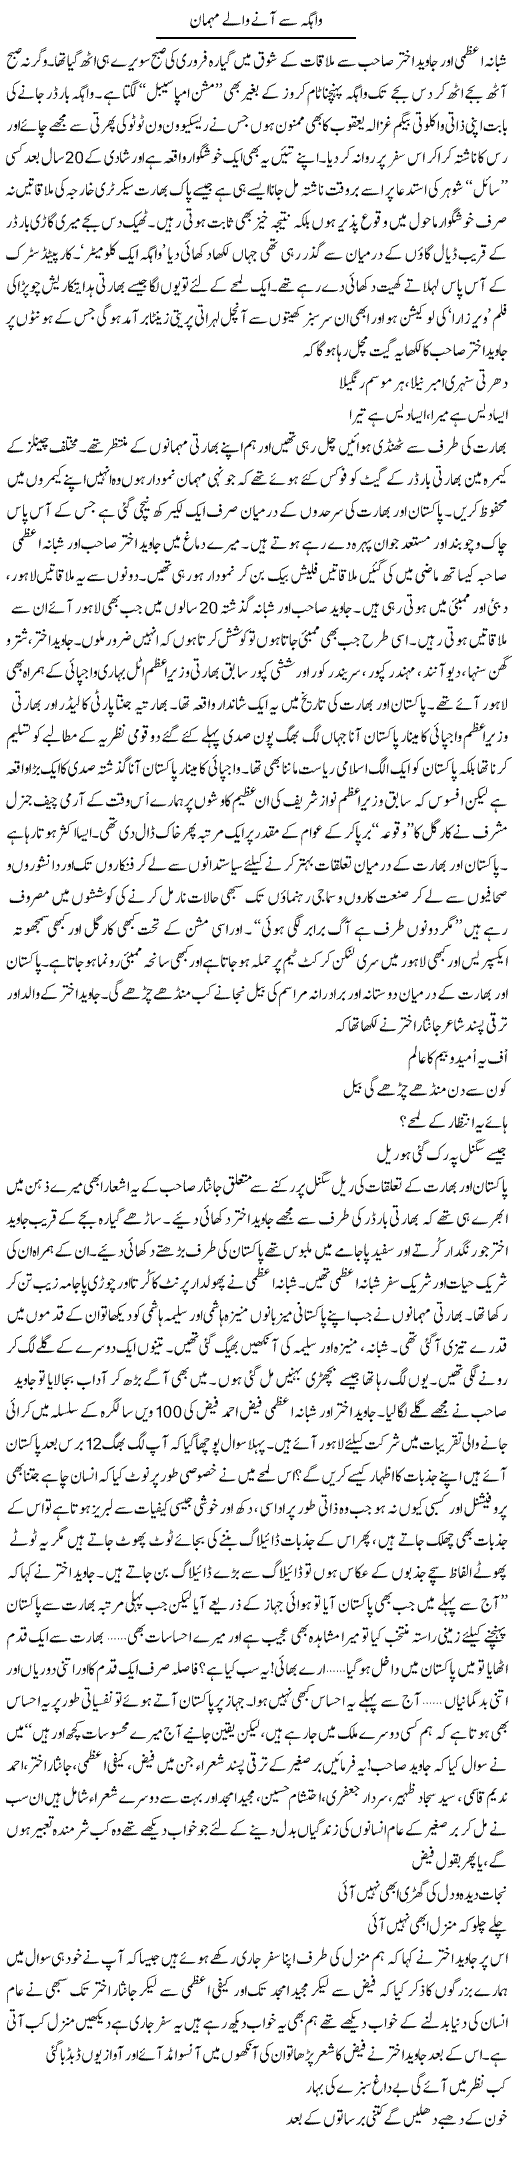 Shabana Azmi in Pakistan Express Column Tahir Sarwar 14 February 2011